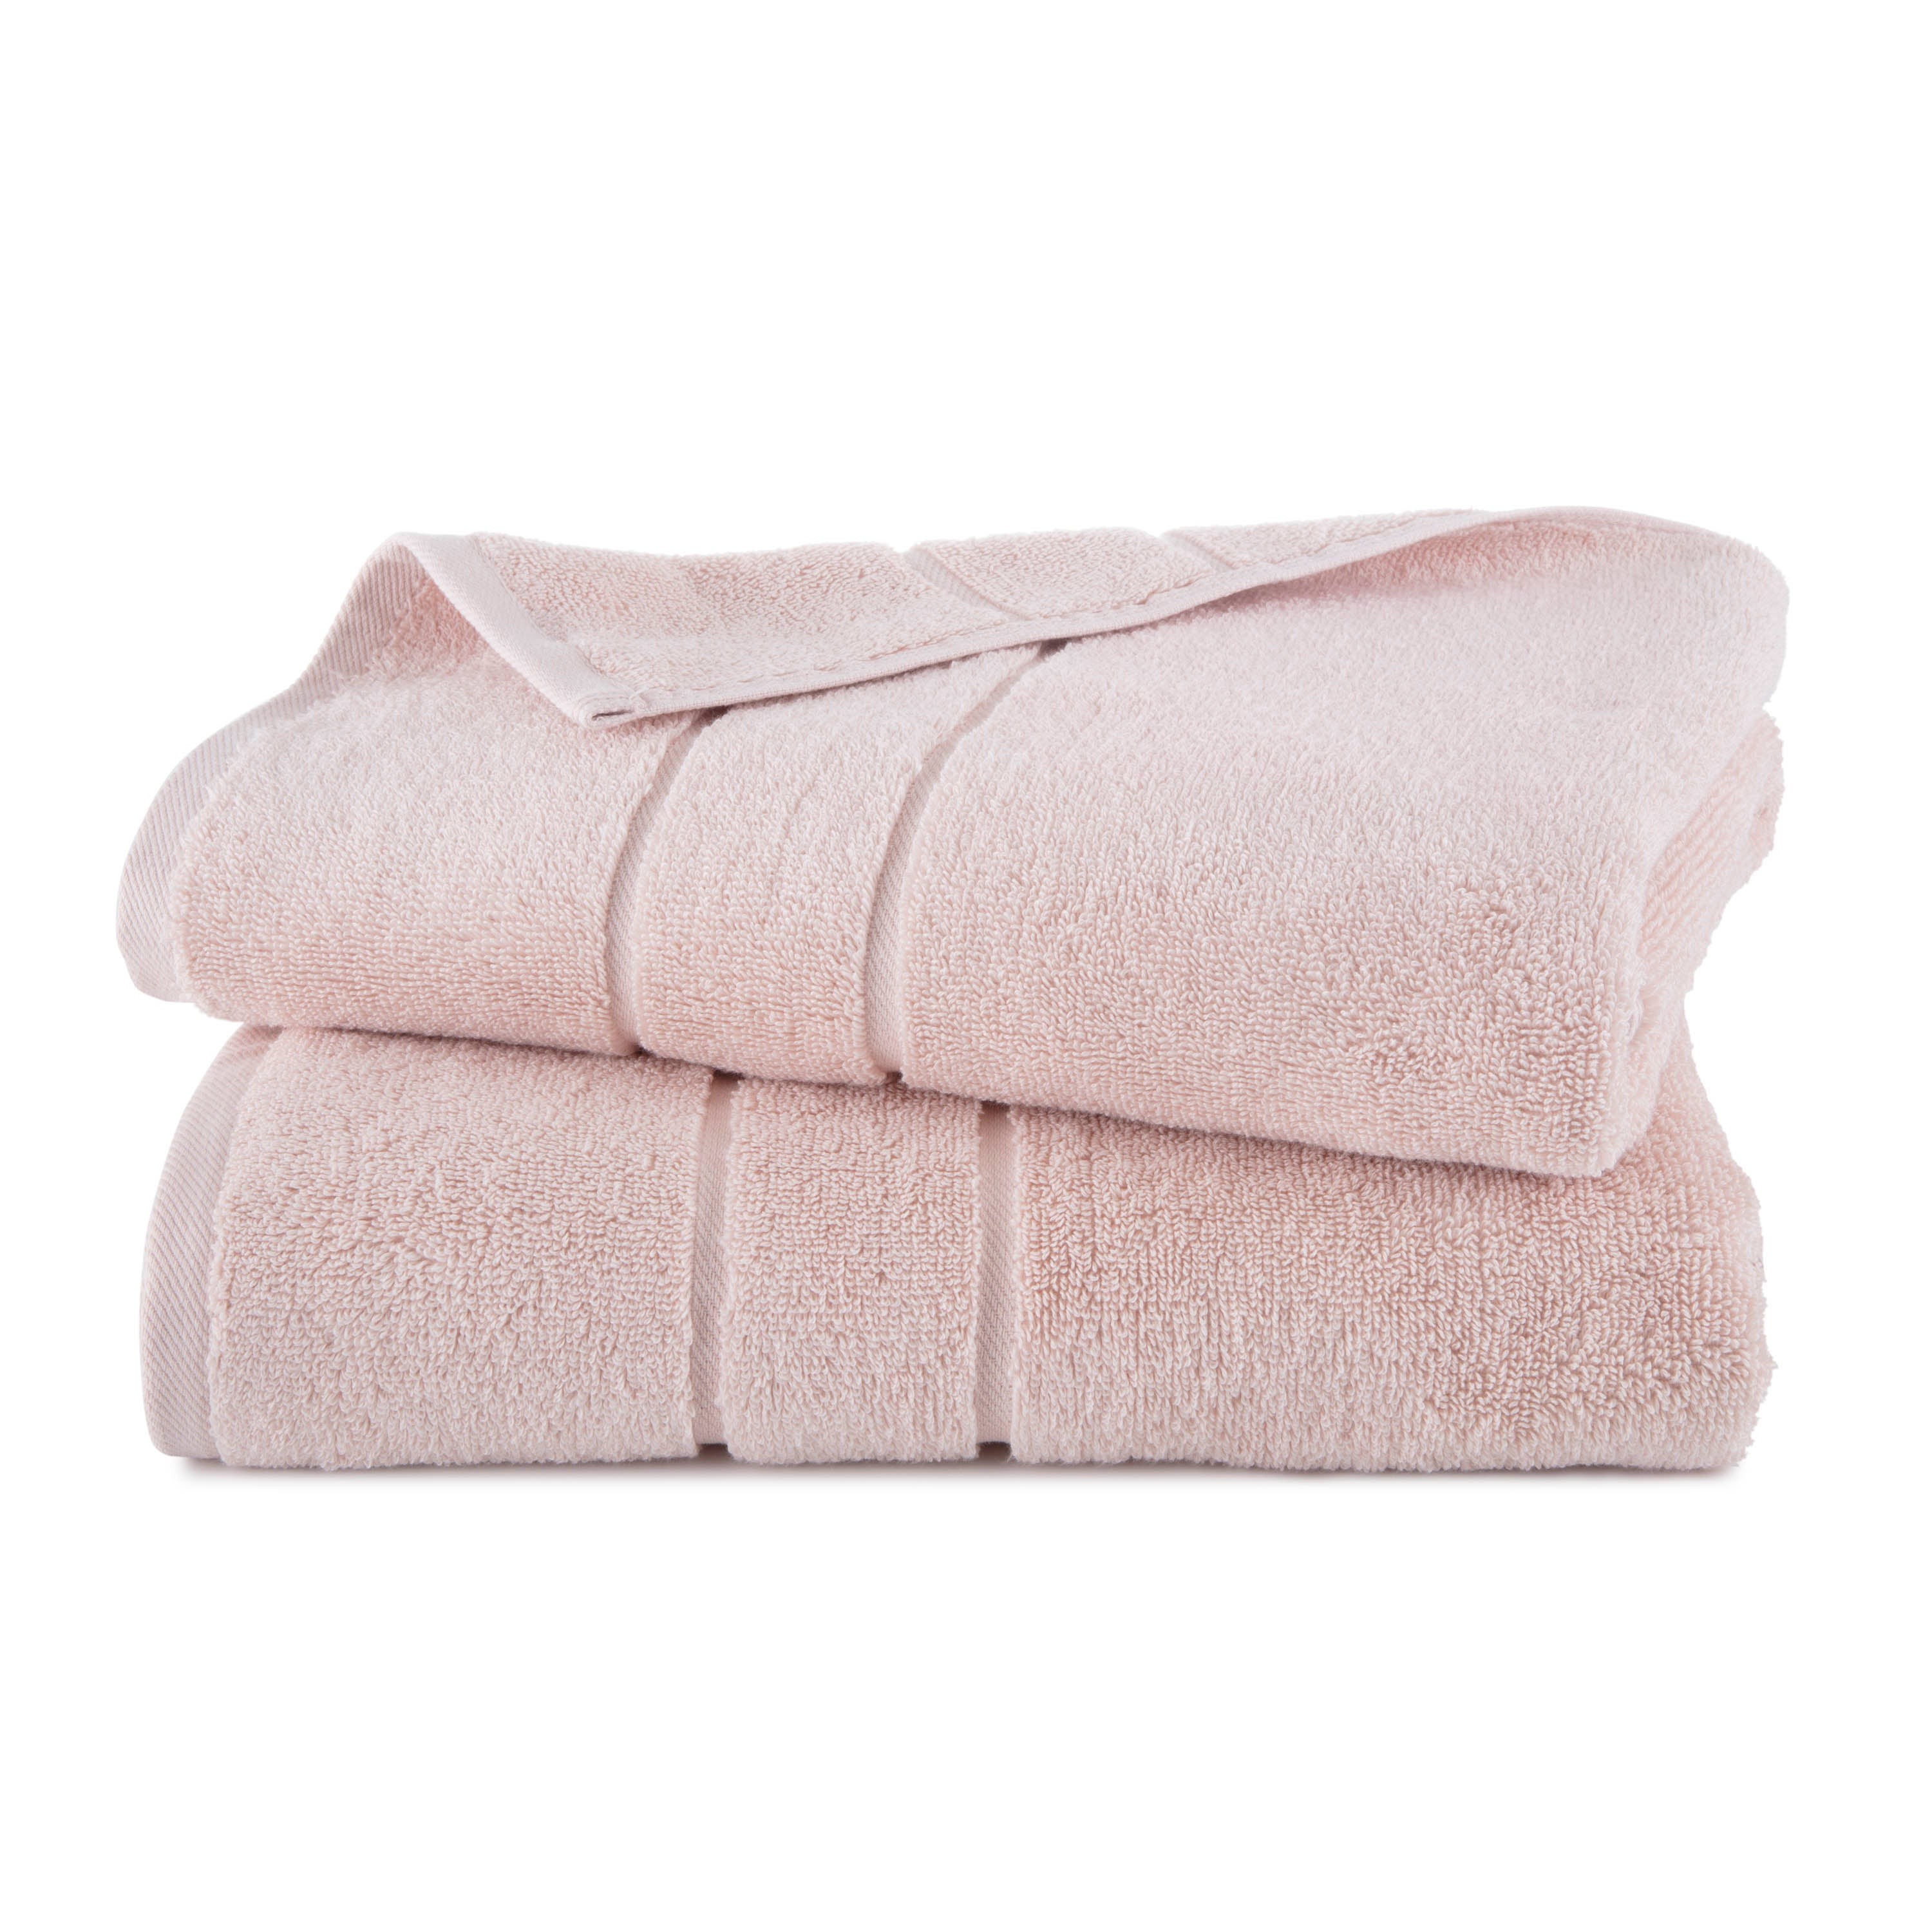 Allergen-Aware Supima Cotton 2-Pack Bath Towel Set Blush